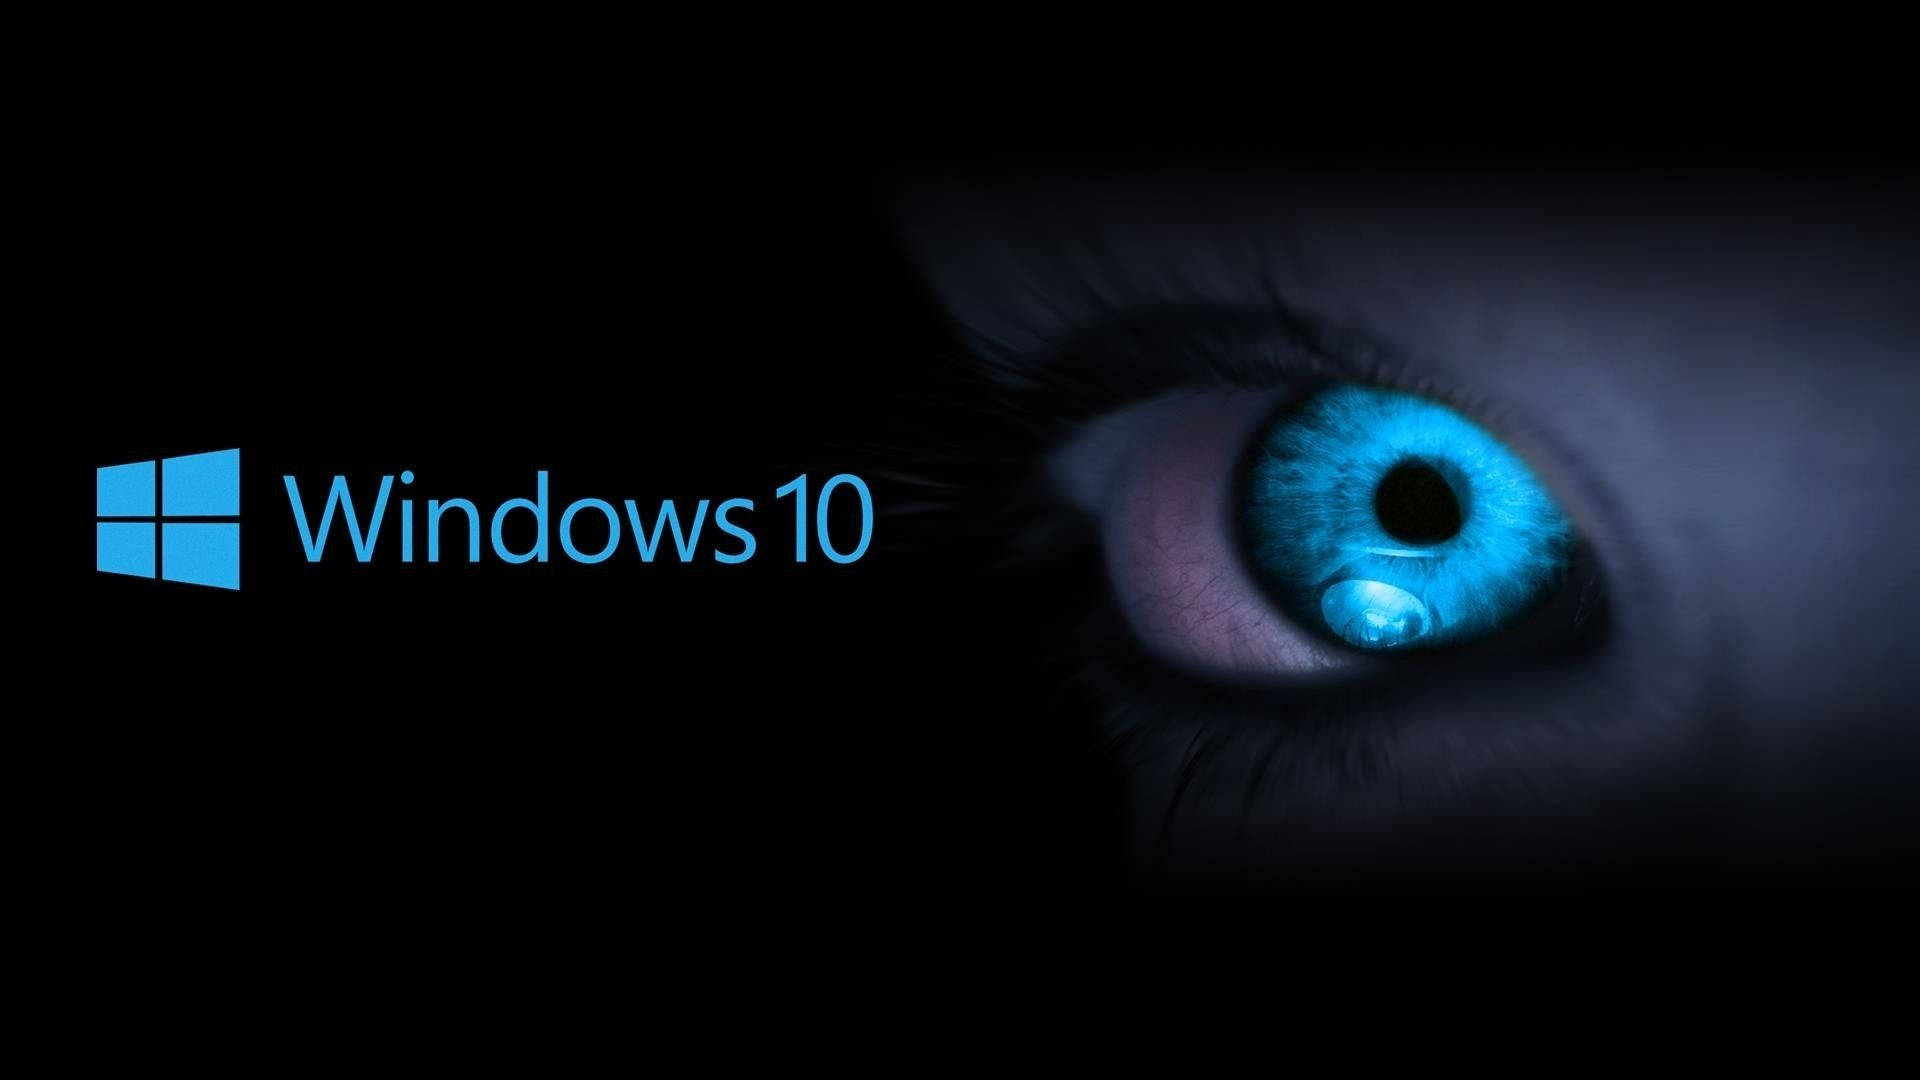 Windows 10 Hd Blue Eye Background